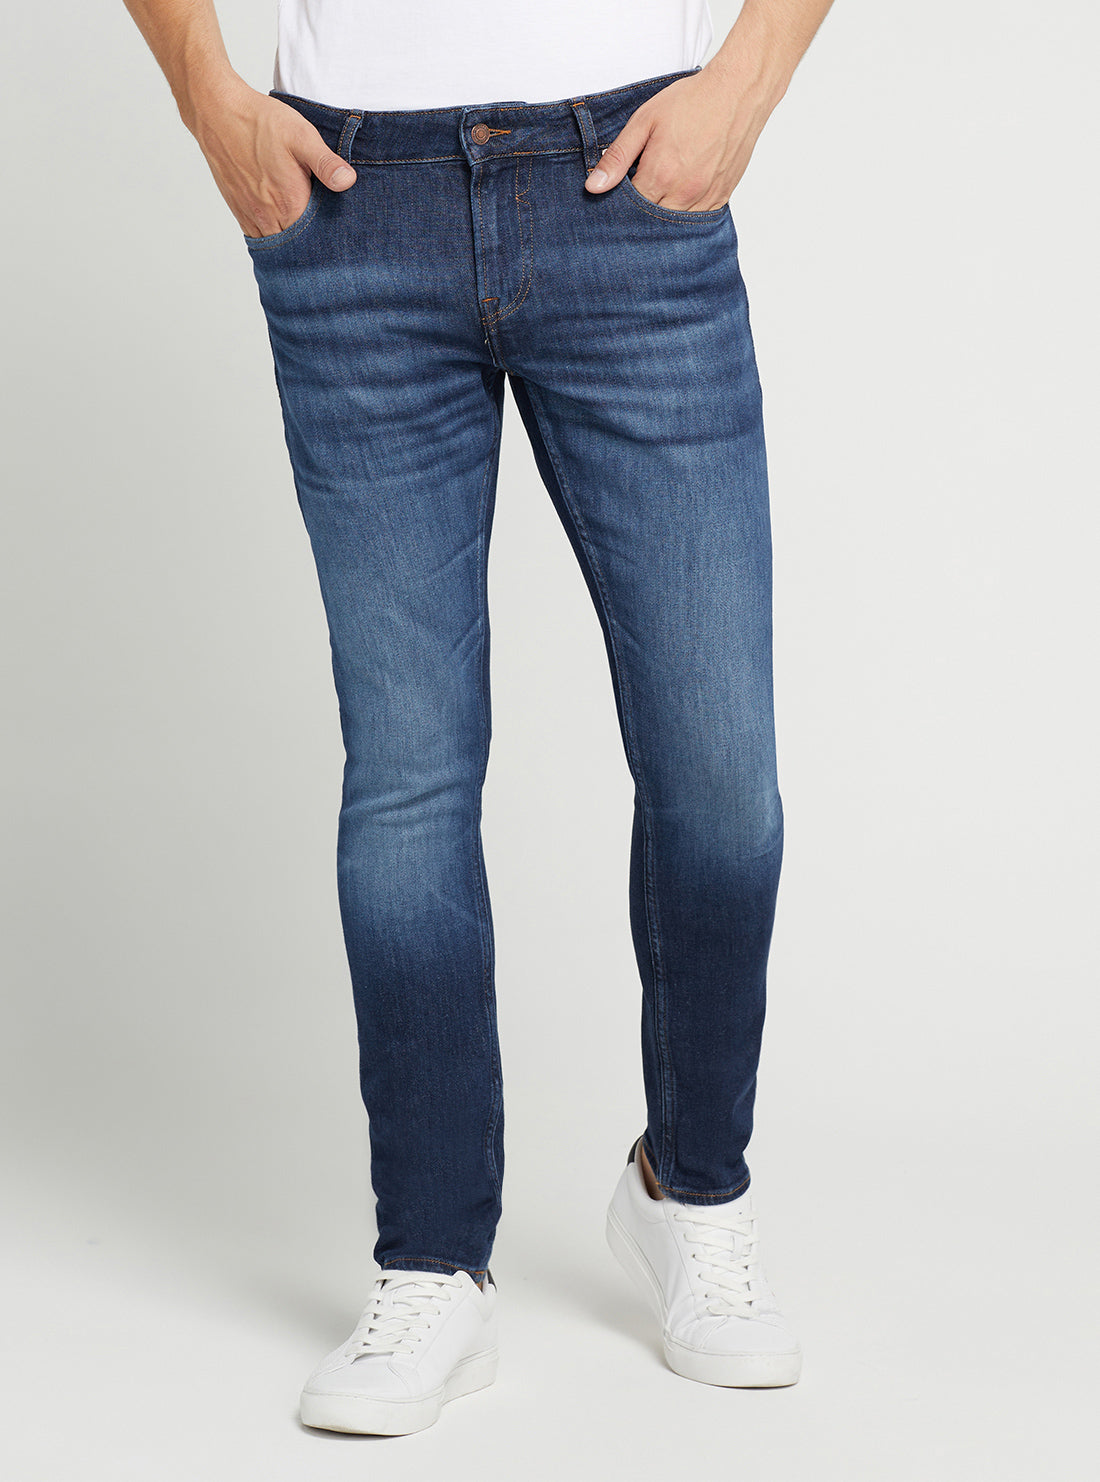 Men's Low Rise Jeans | Skinny & Straight Leg